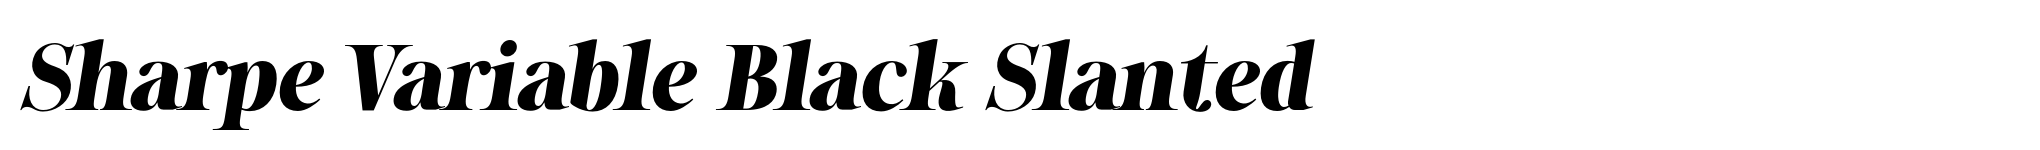 Sharpe Variable Black Slanted image